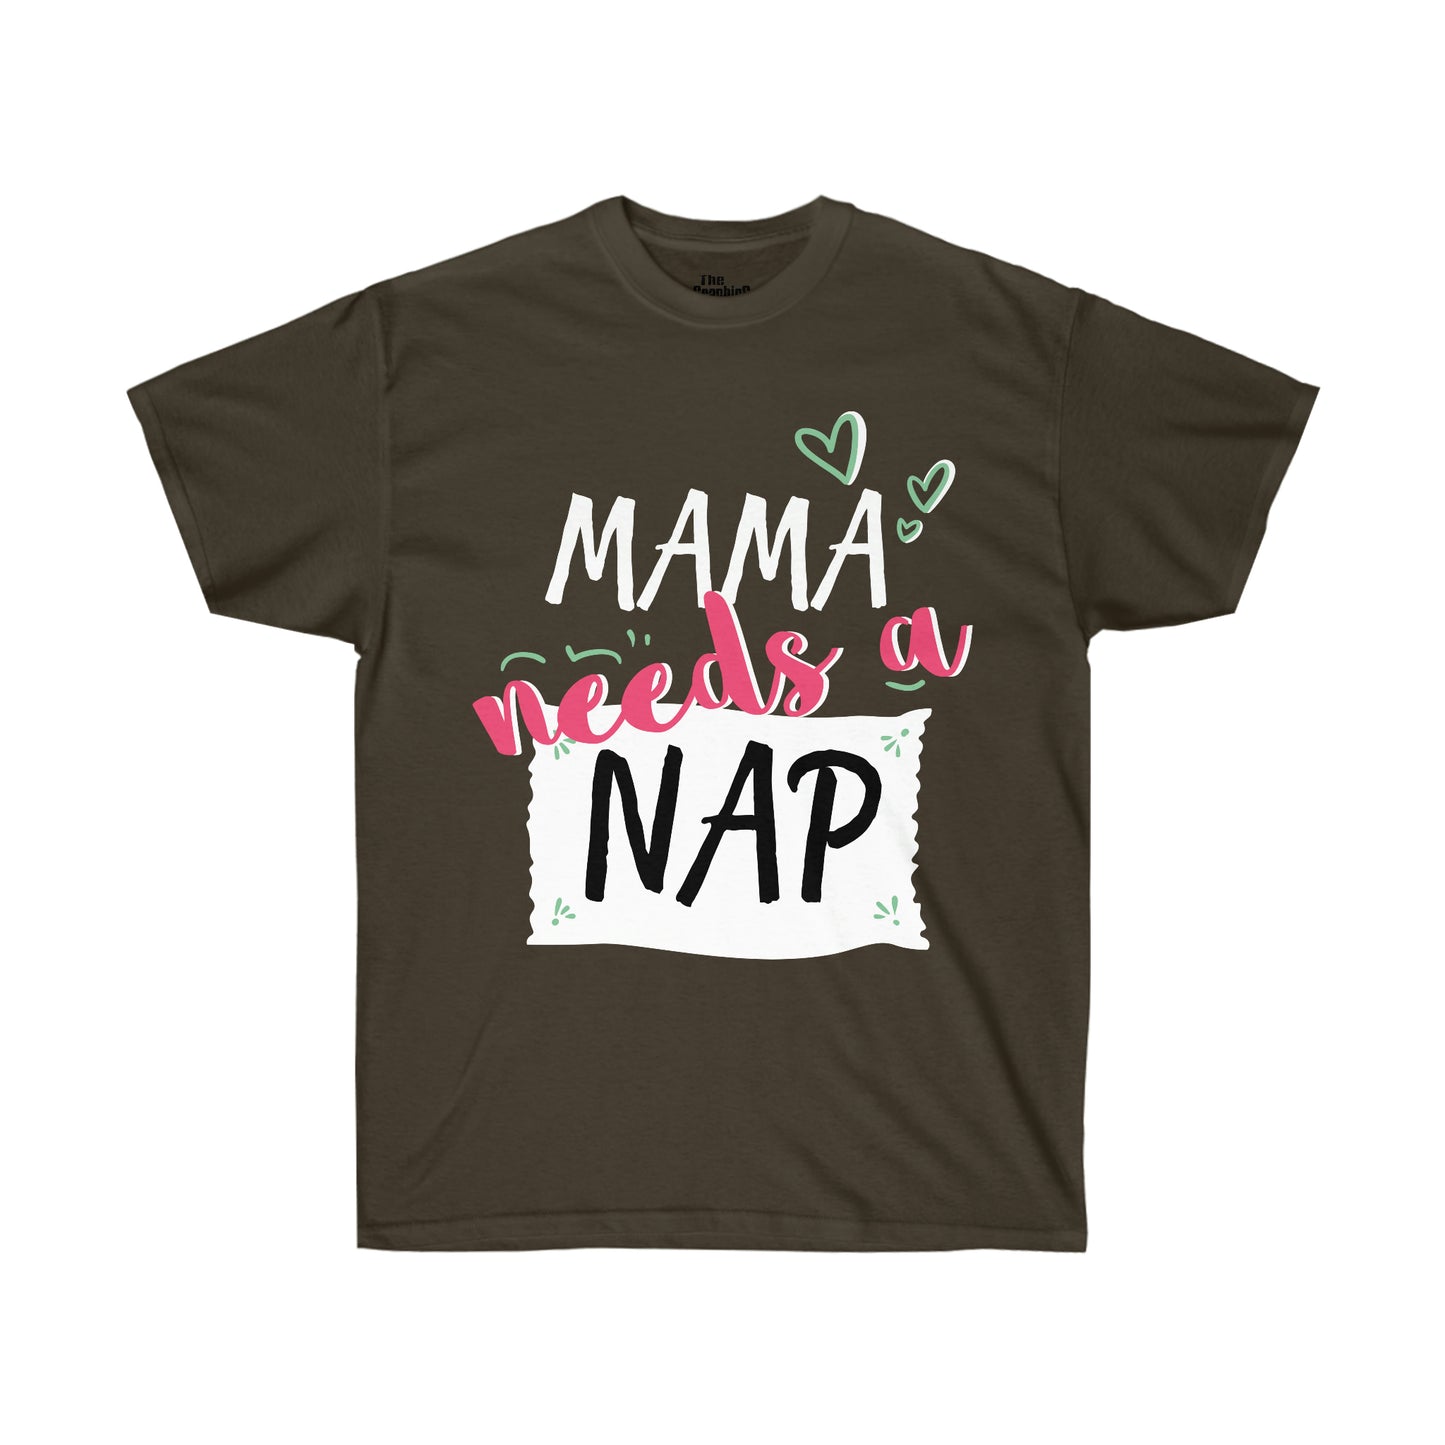 Momma Needs a nap